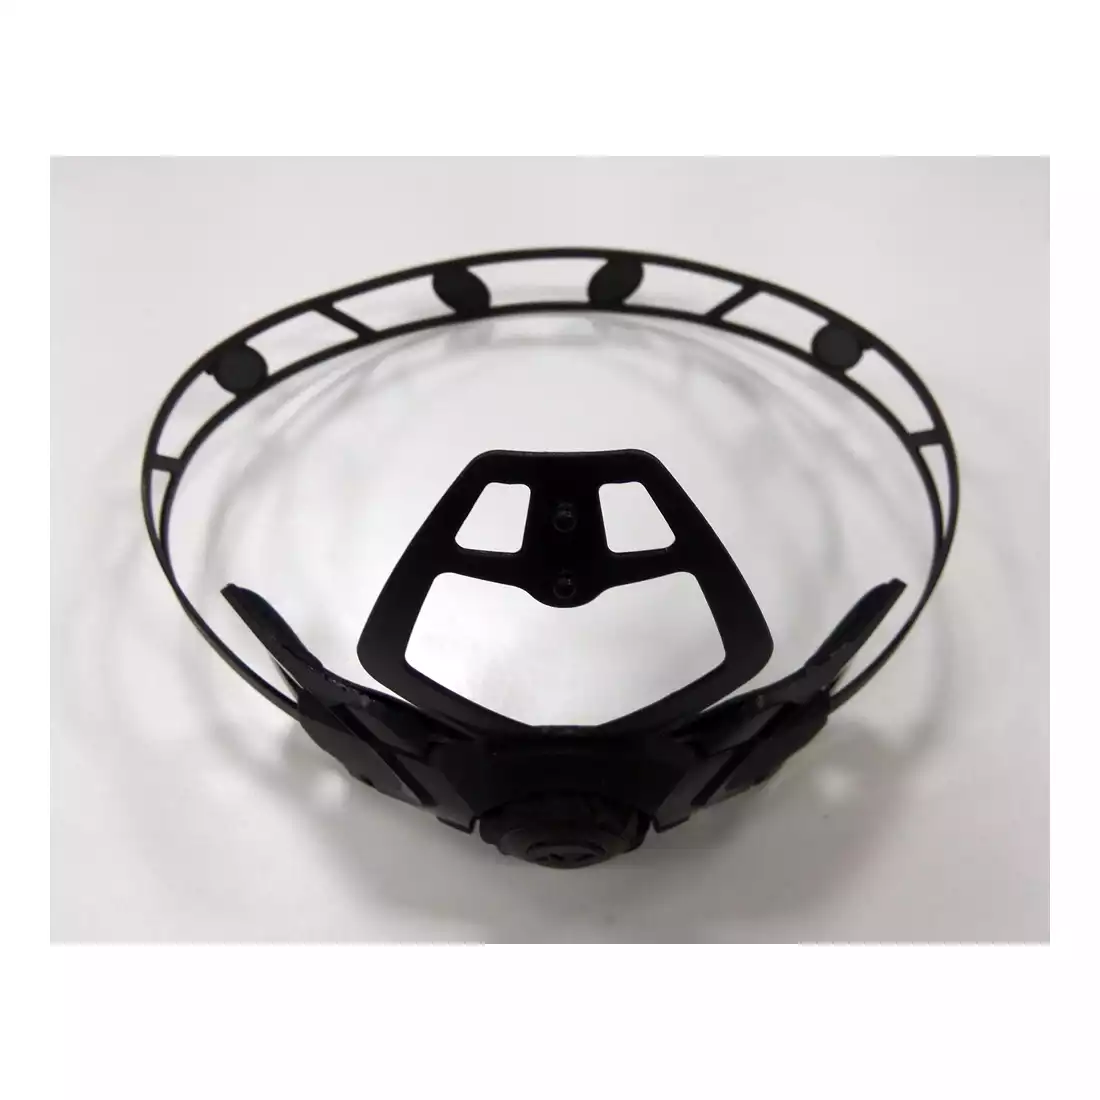 GIRO knob for adjusting TYRANT FIT SYSTEM helmets, black